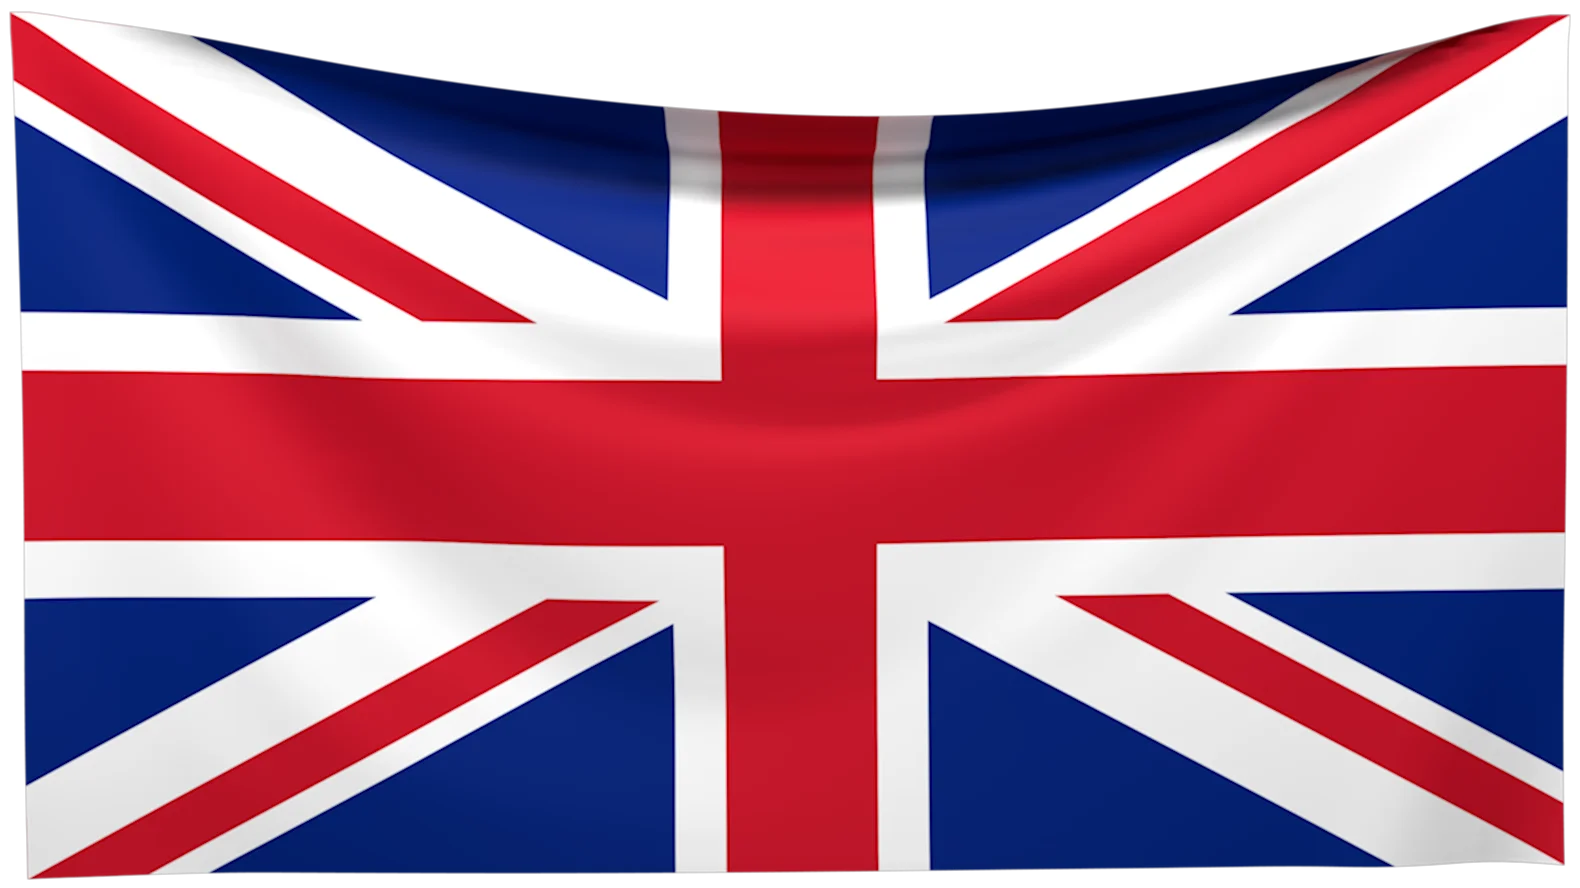 Bandera de Reino Unido de Gran Bretaña